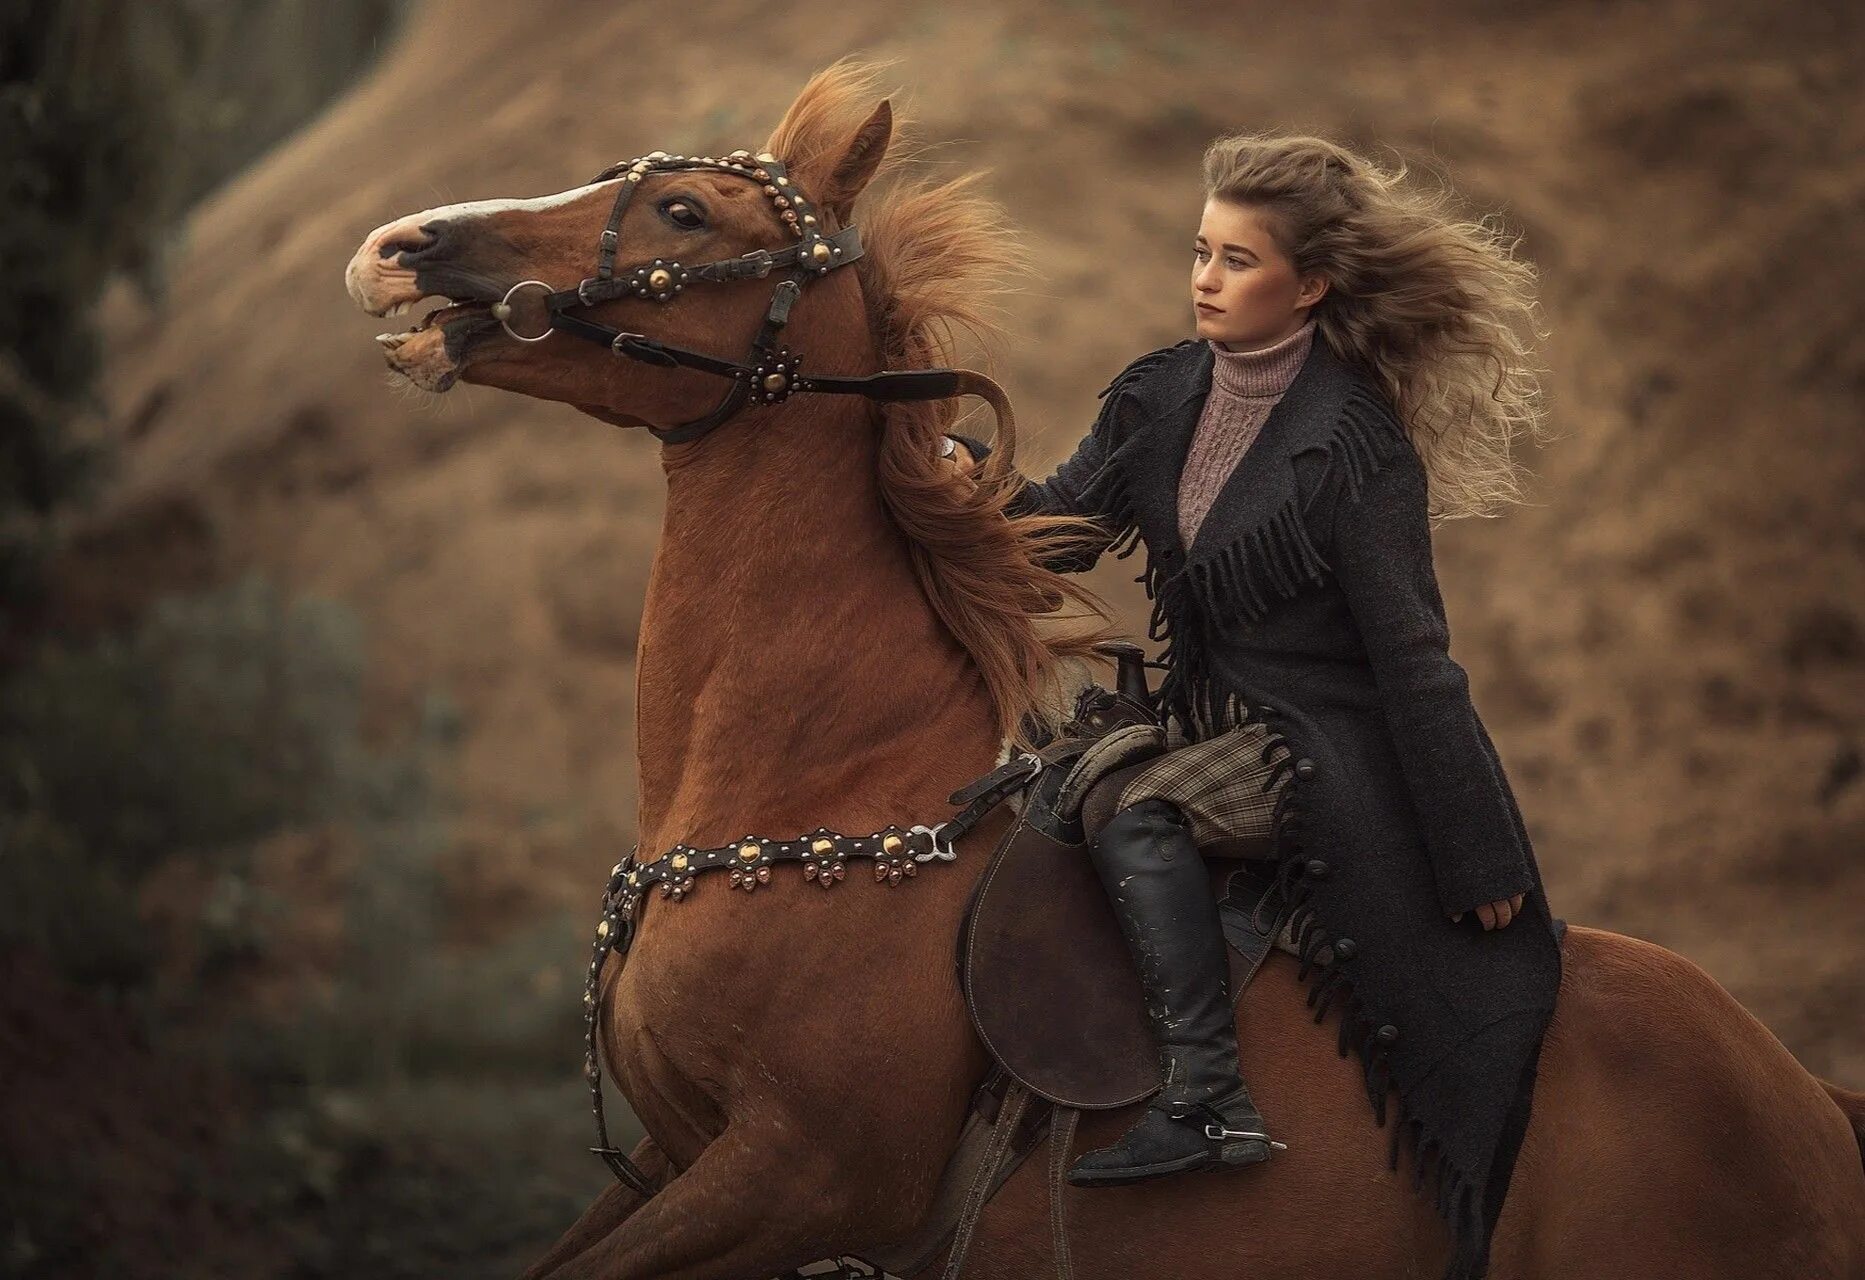 Ж кон. Девушка на коне. Фотосессия с лошадьми. Красивая женщина на коне.